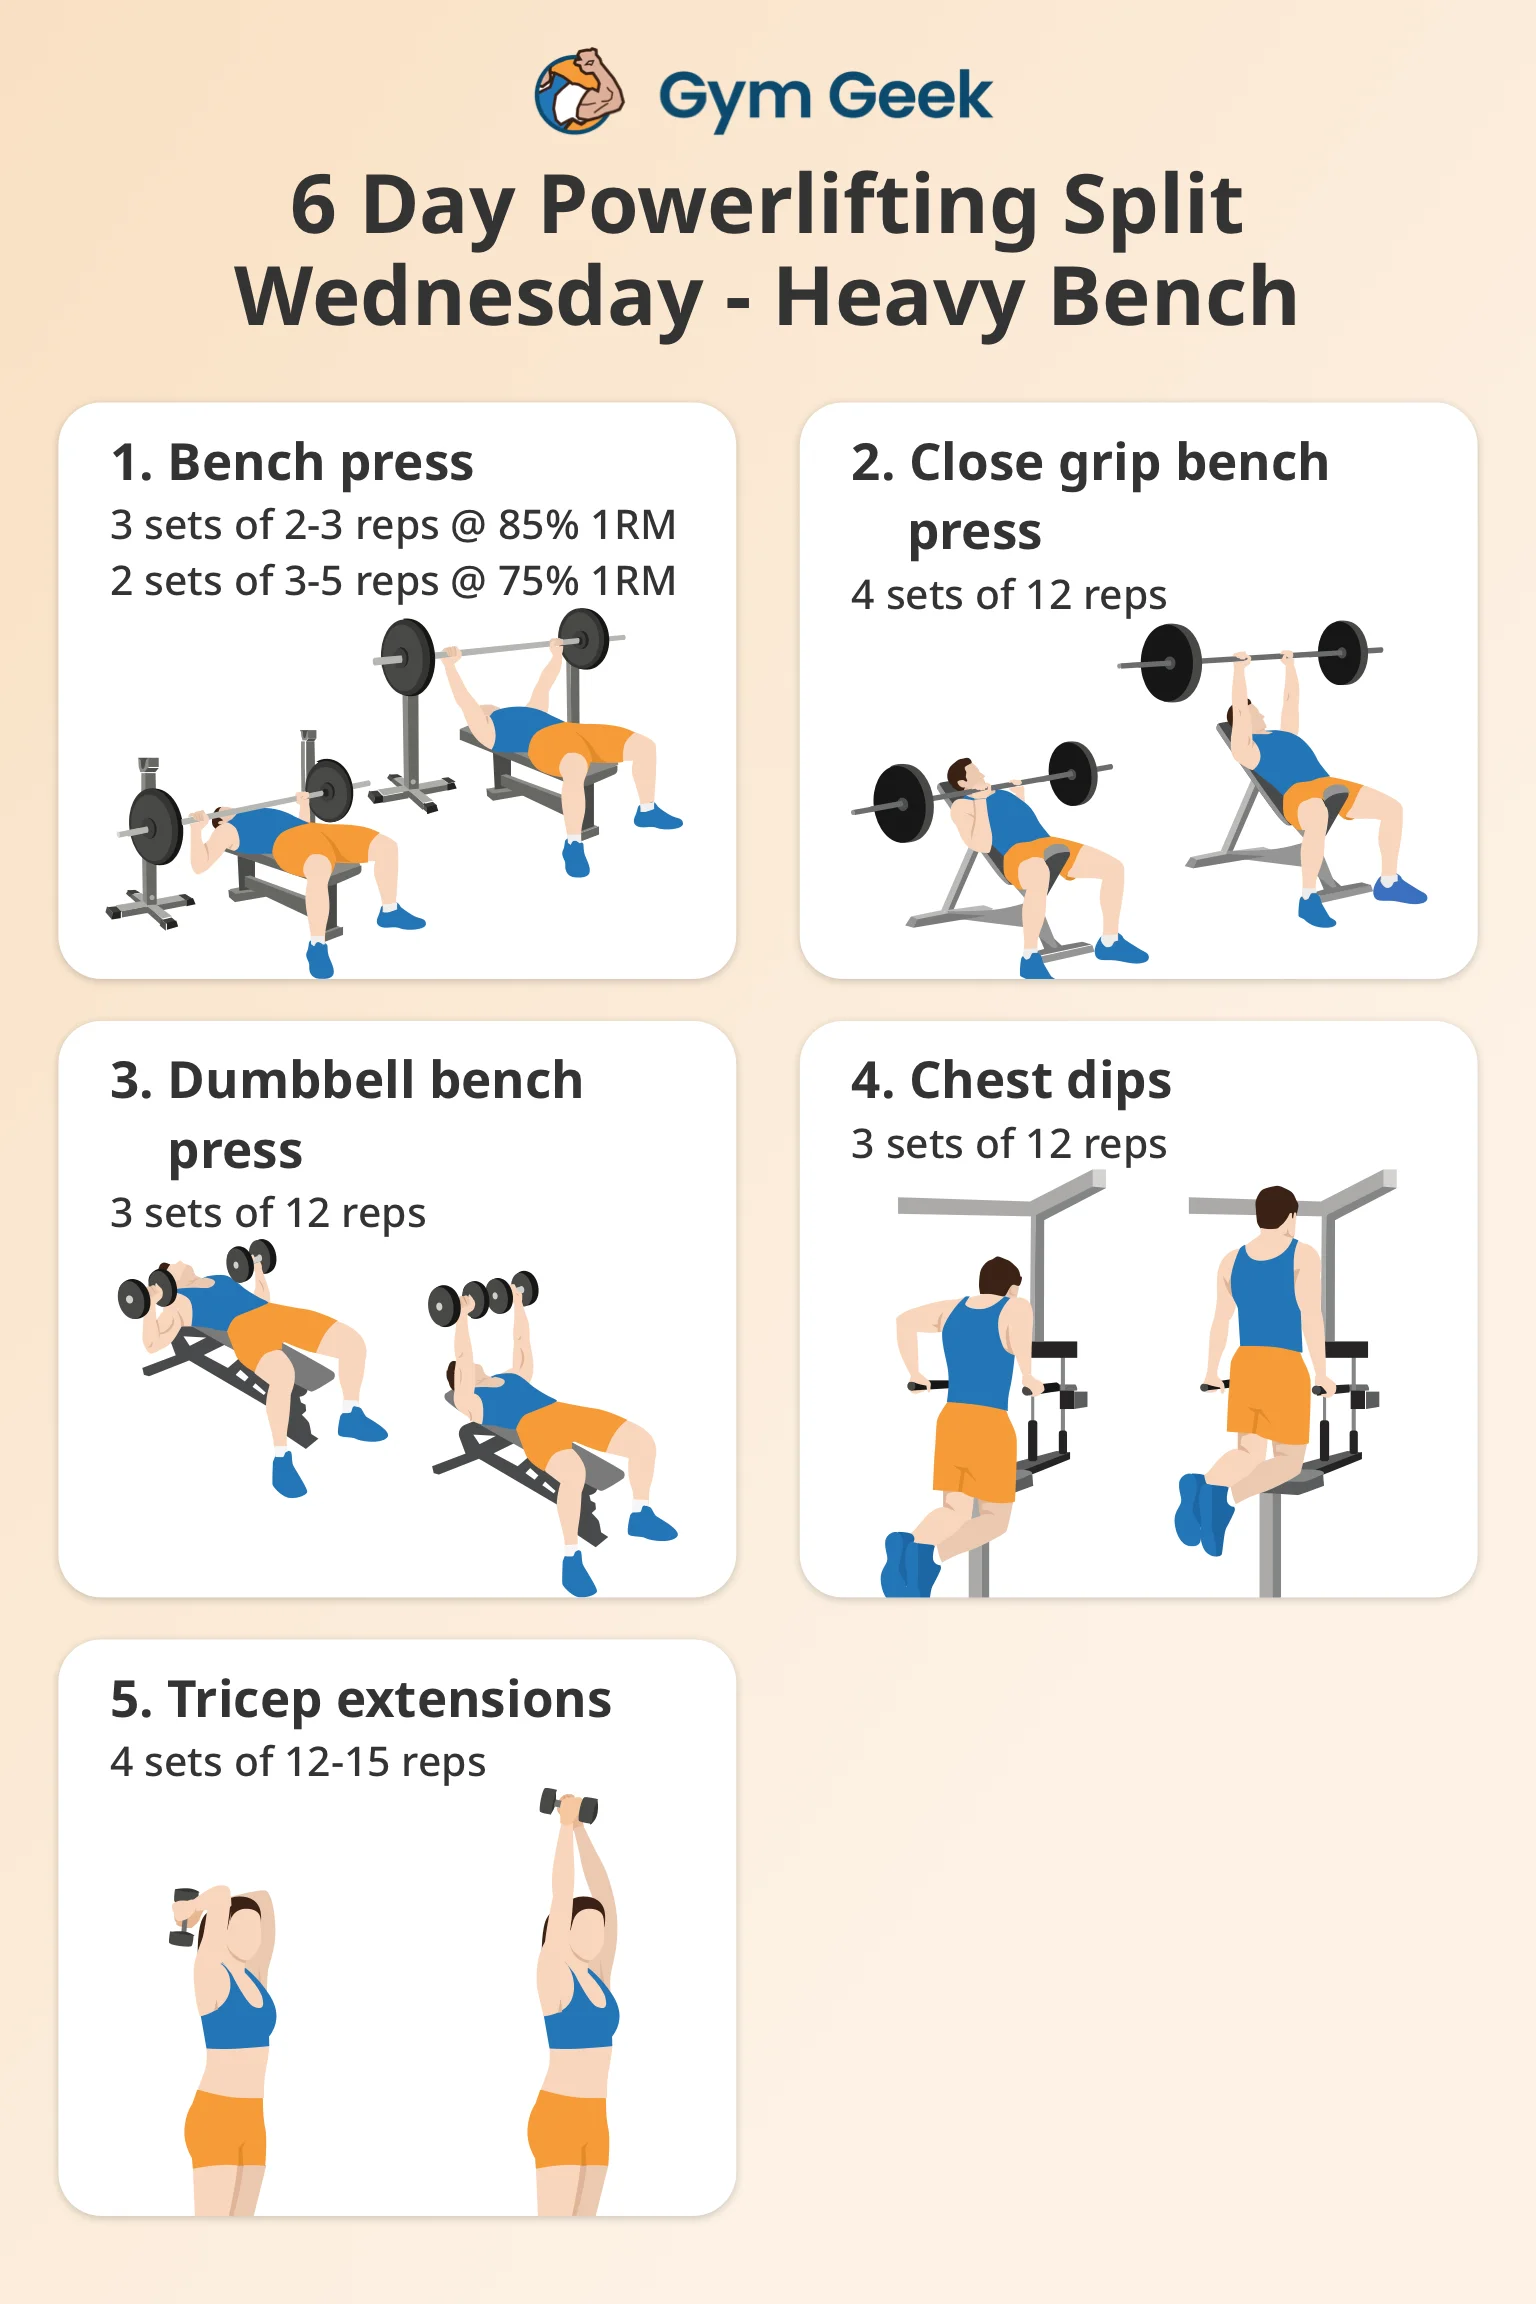 infographic - 6 day powerlifting program - Wednesday - Heavy Bench